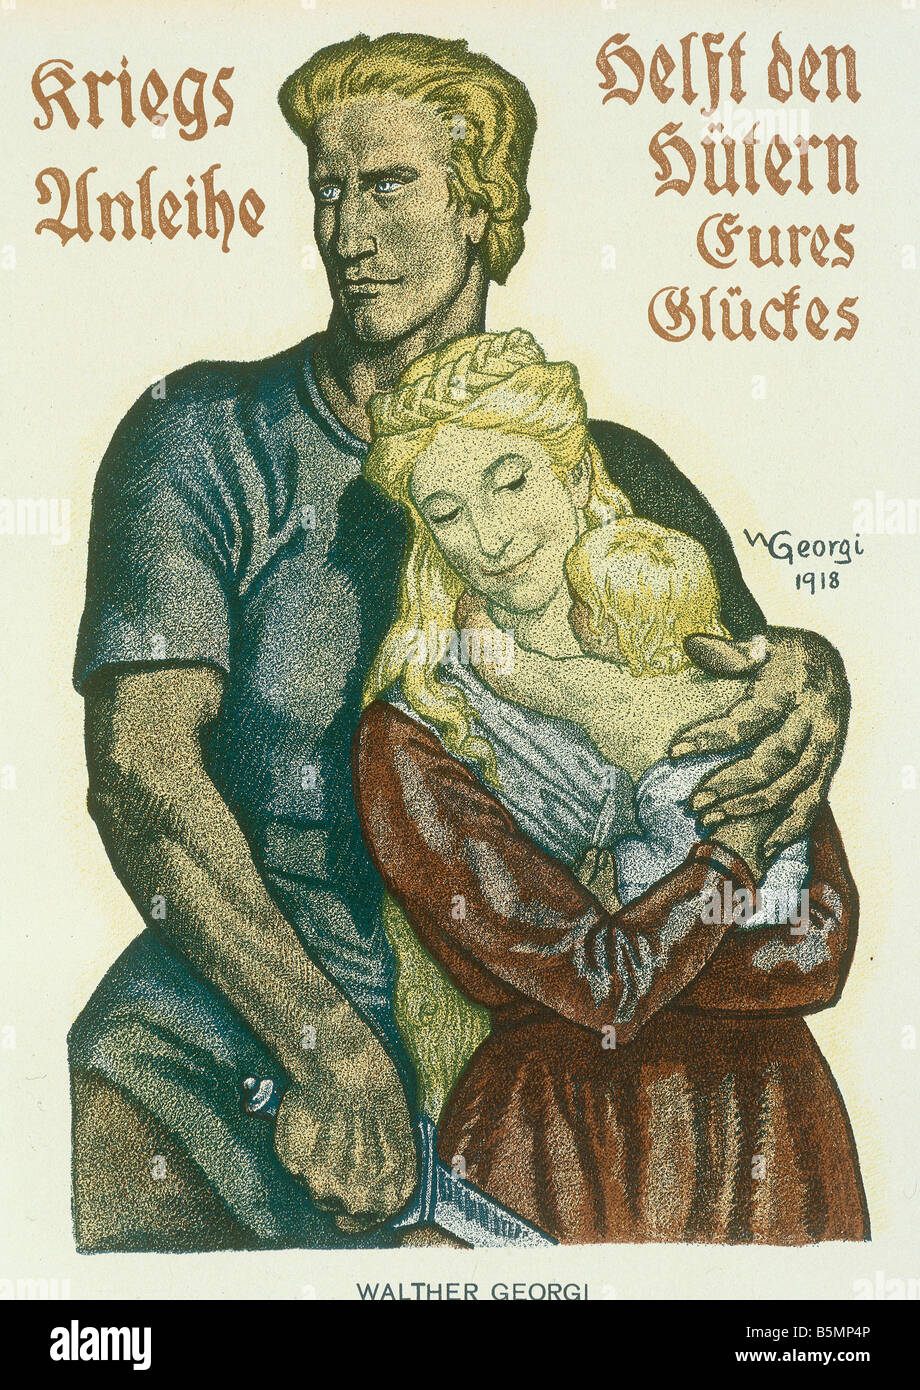 9 1914 0 0 E1 6 9th War Loan Campaign Poster by Georgi First World War 1914 1918 War Loans War Loans Bonds issued by the German Stock Photo